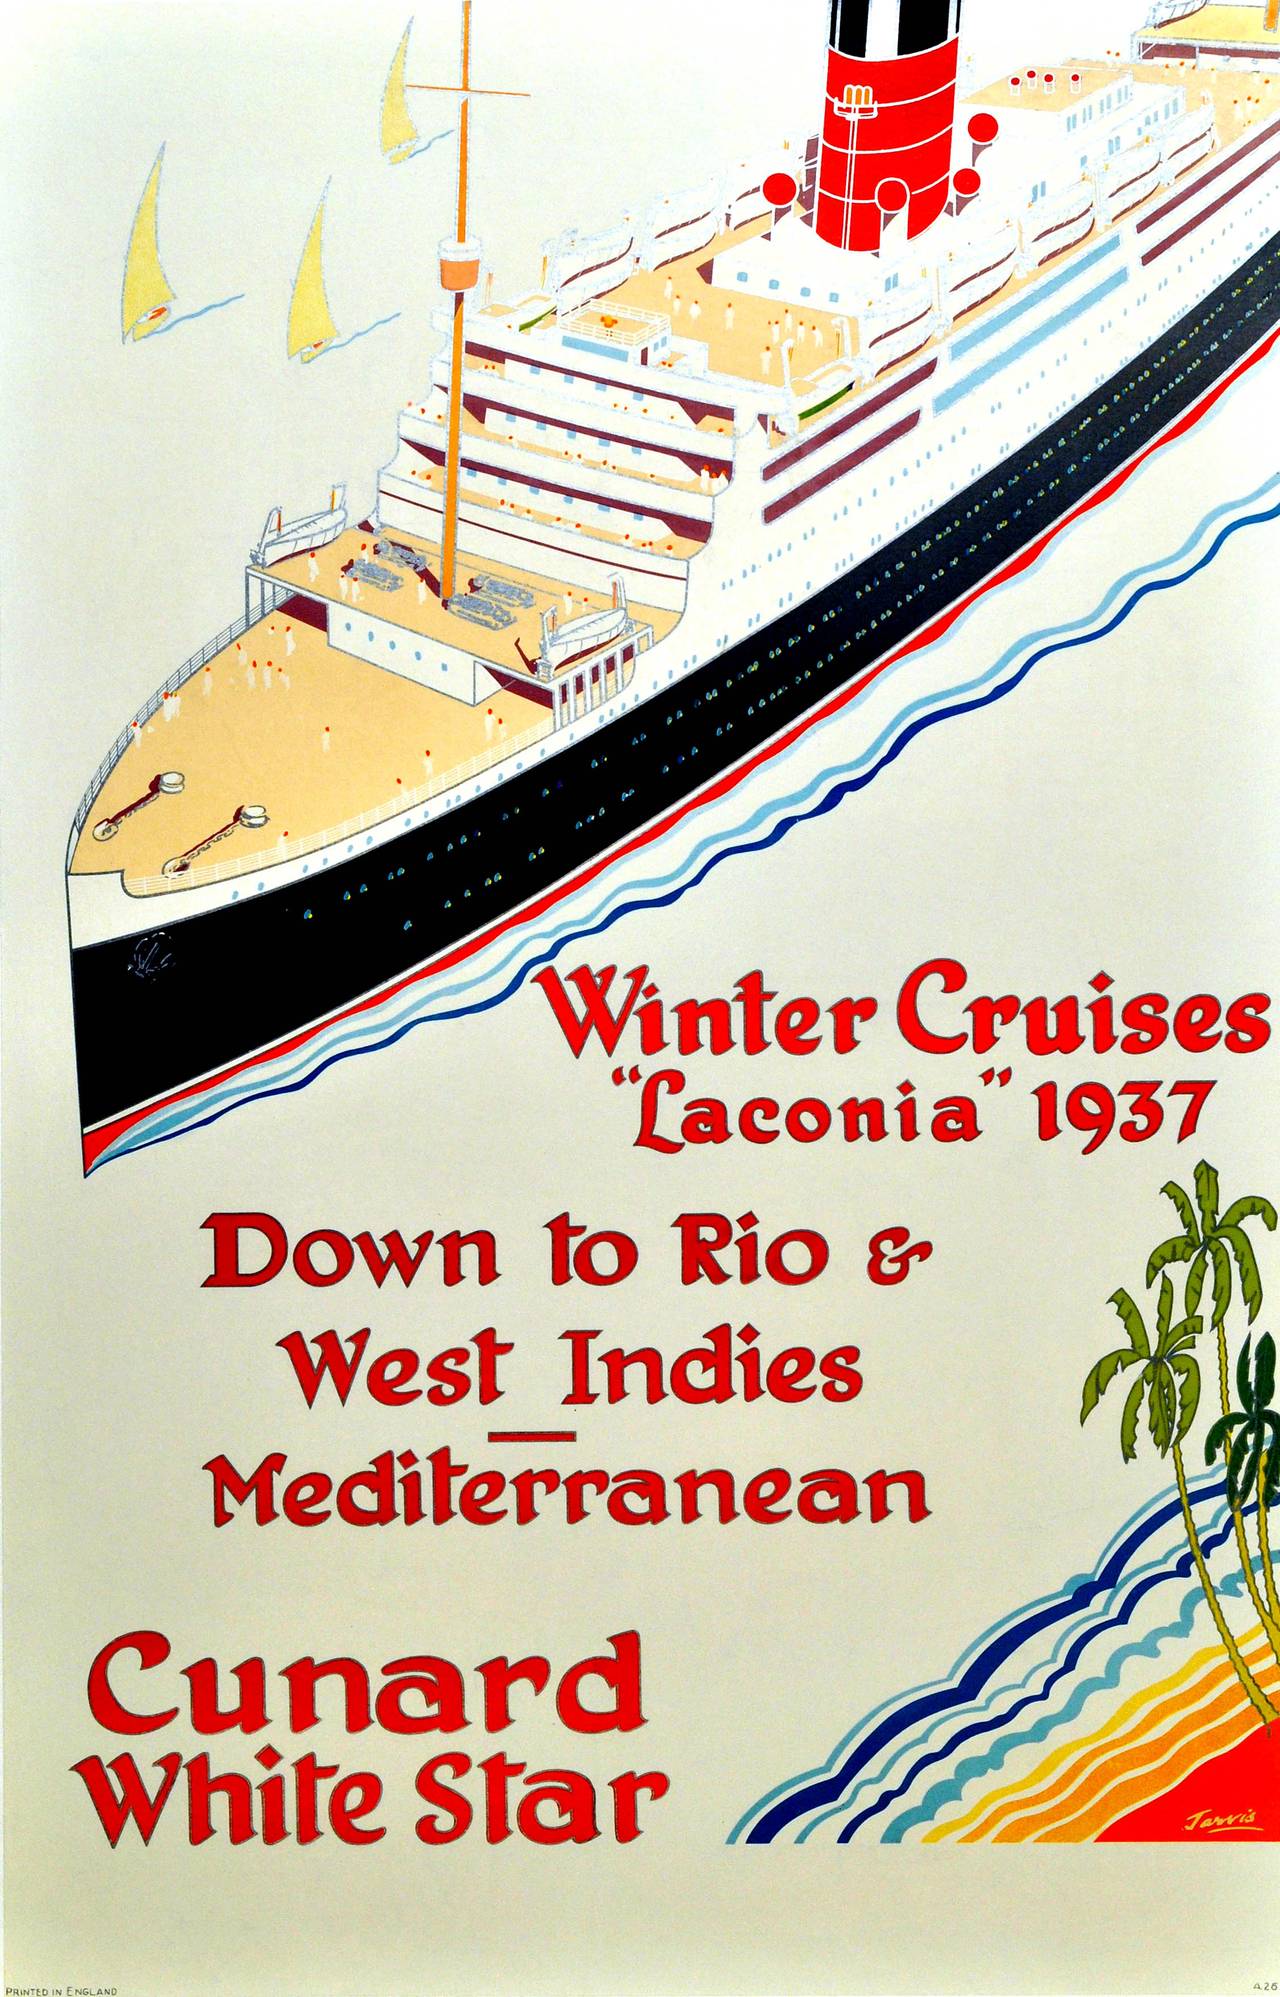 Jarvis Print - Original Vintage Art Deco Poster - Cunard White Star Winter Cruises Laconia 1937